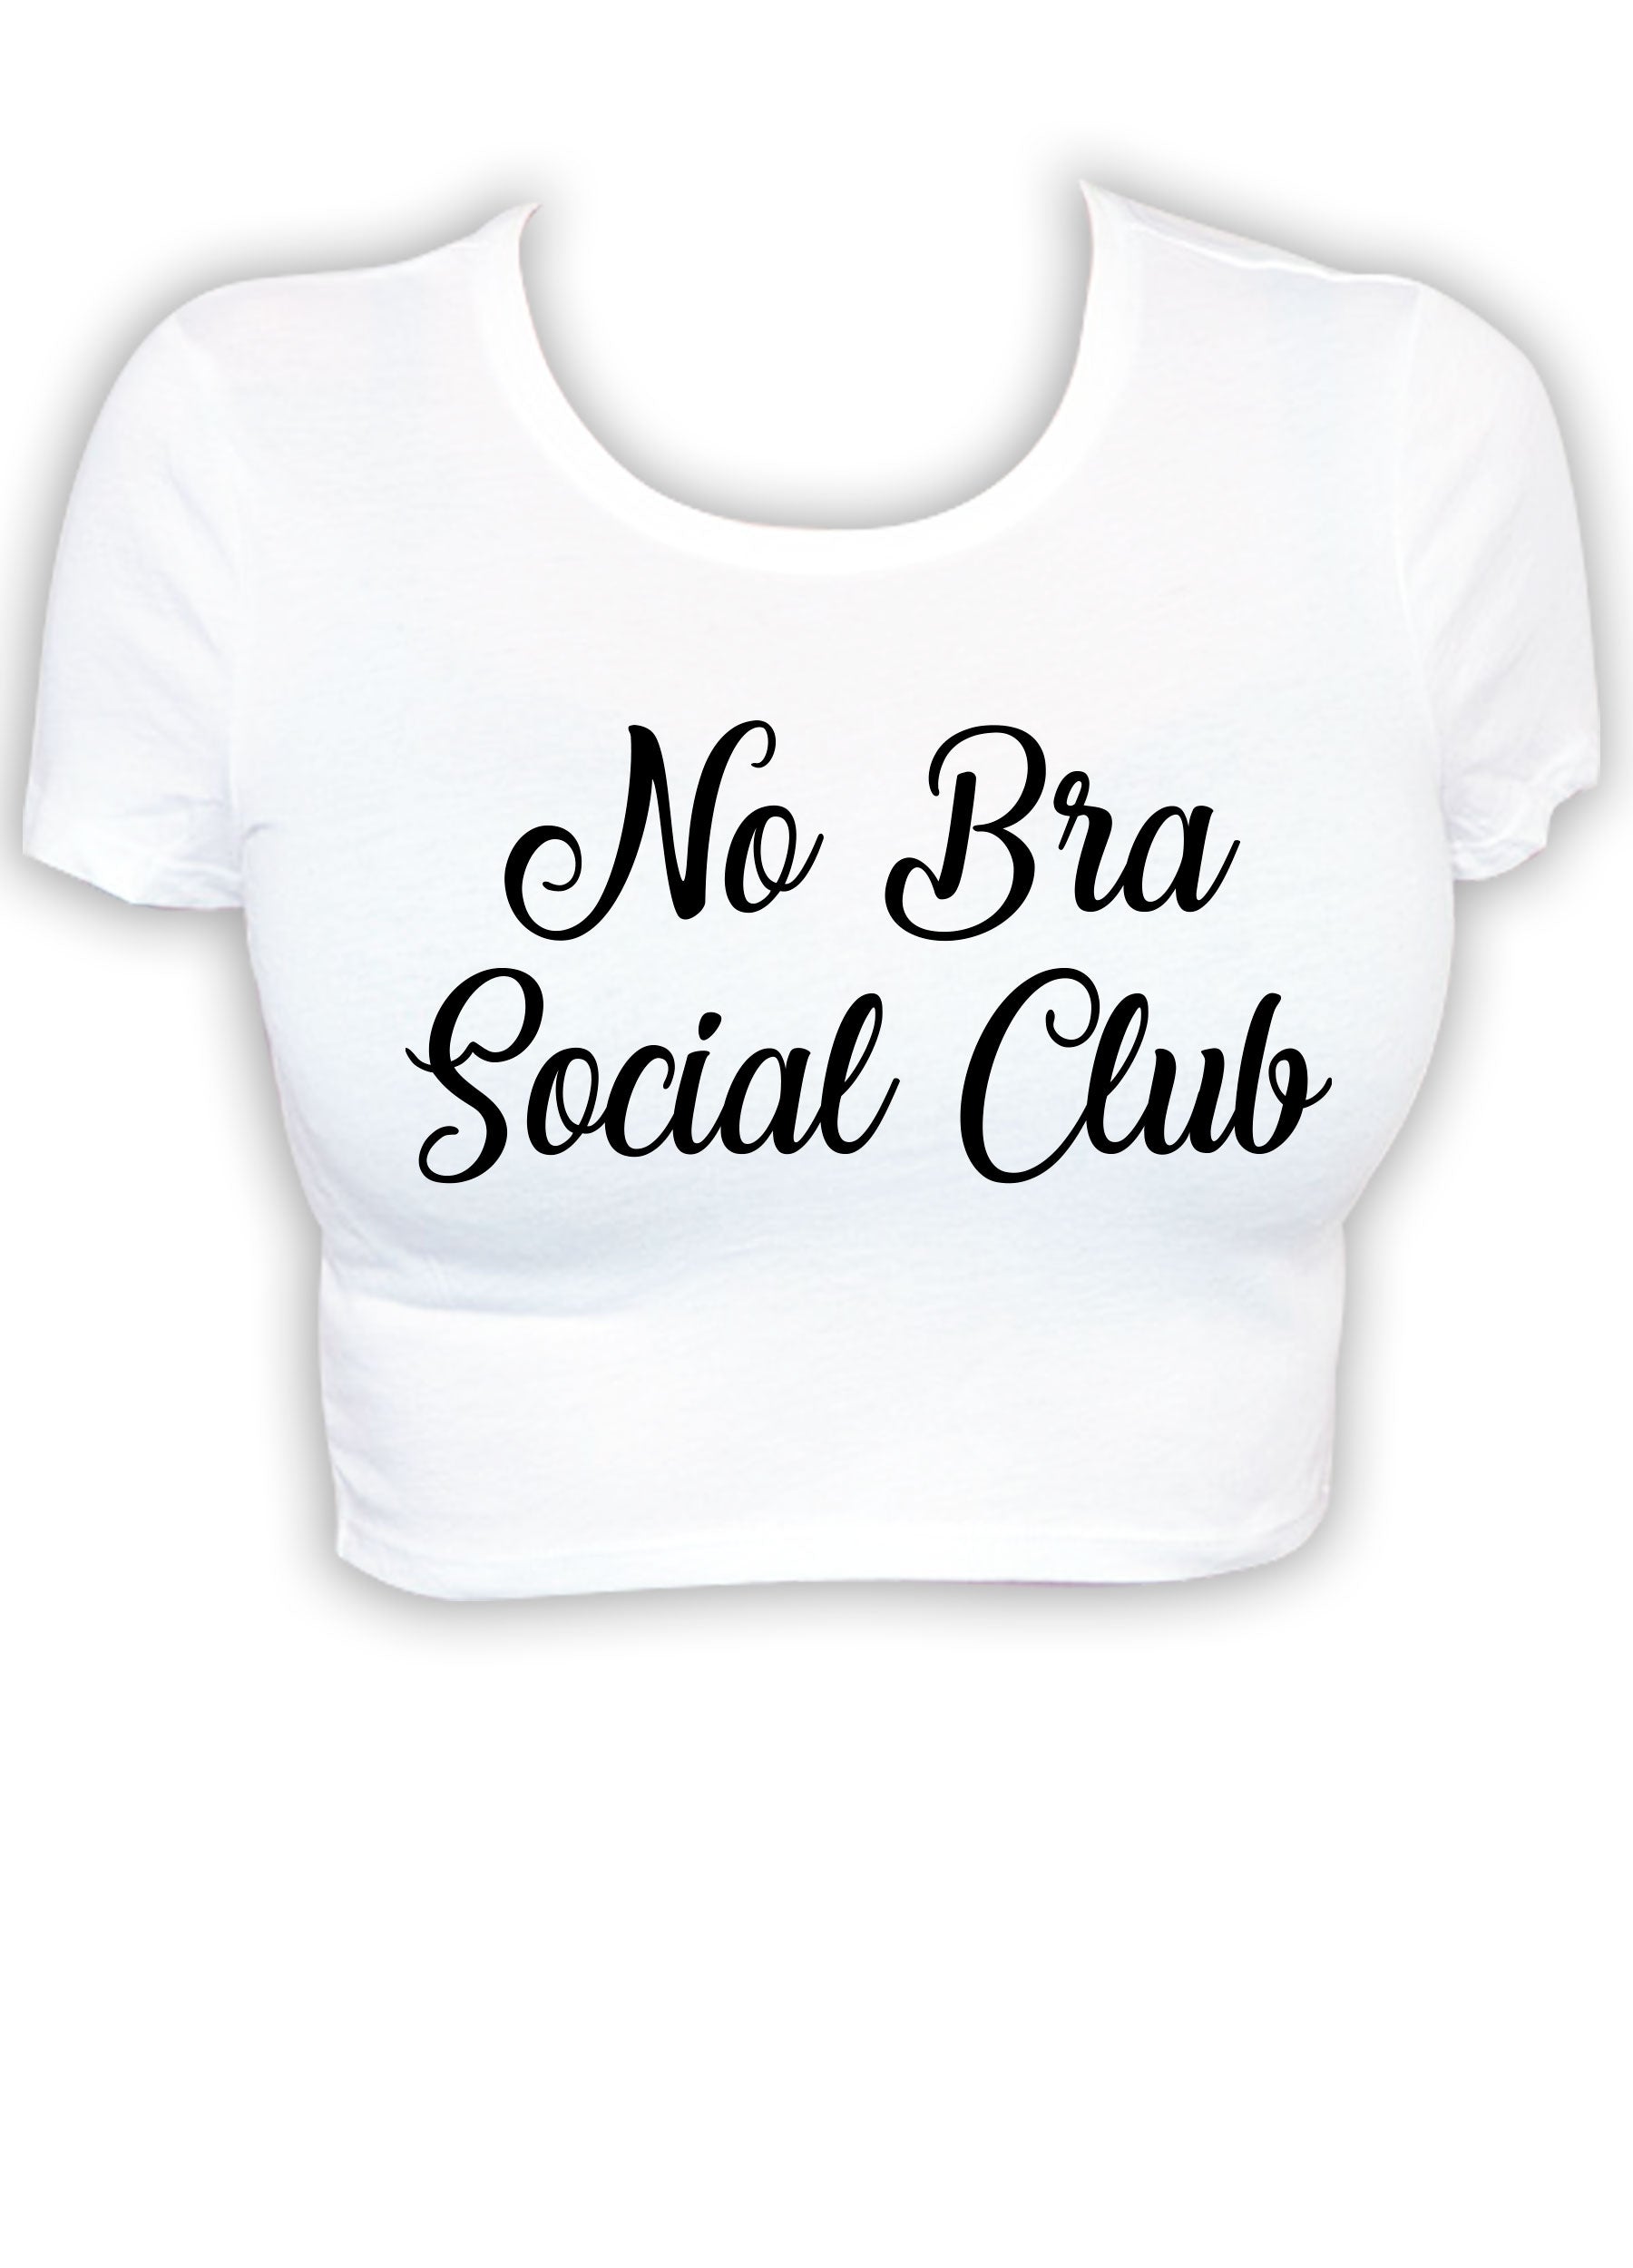 No Bra Club Official T-shirt, No Bra Club Tee, Unisex T Shirt – NO